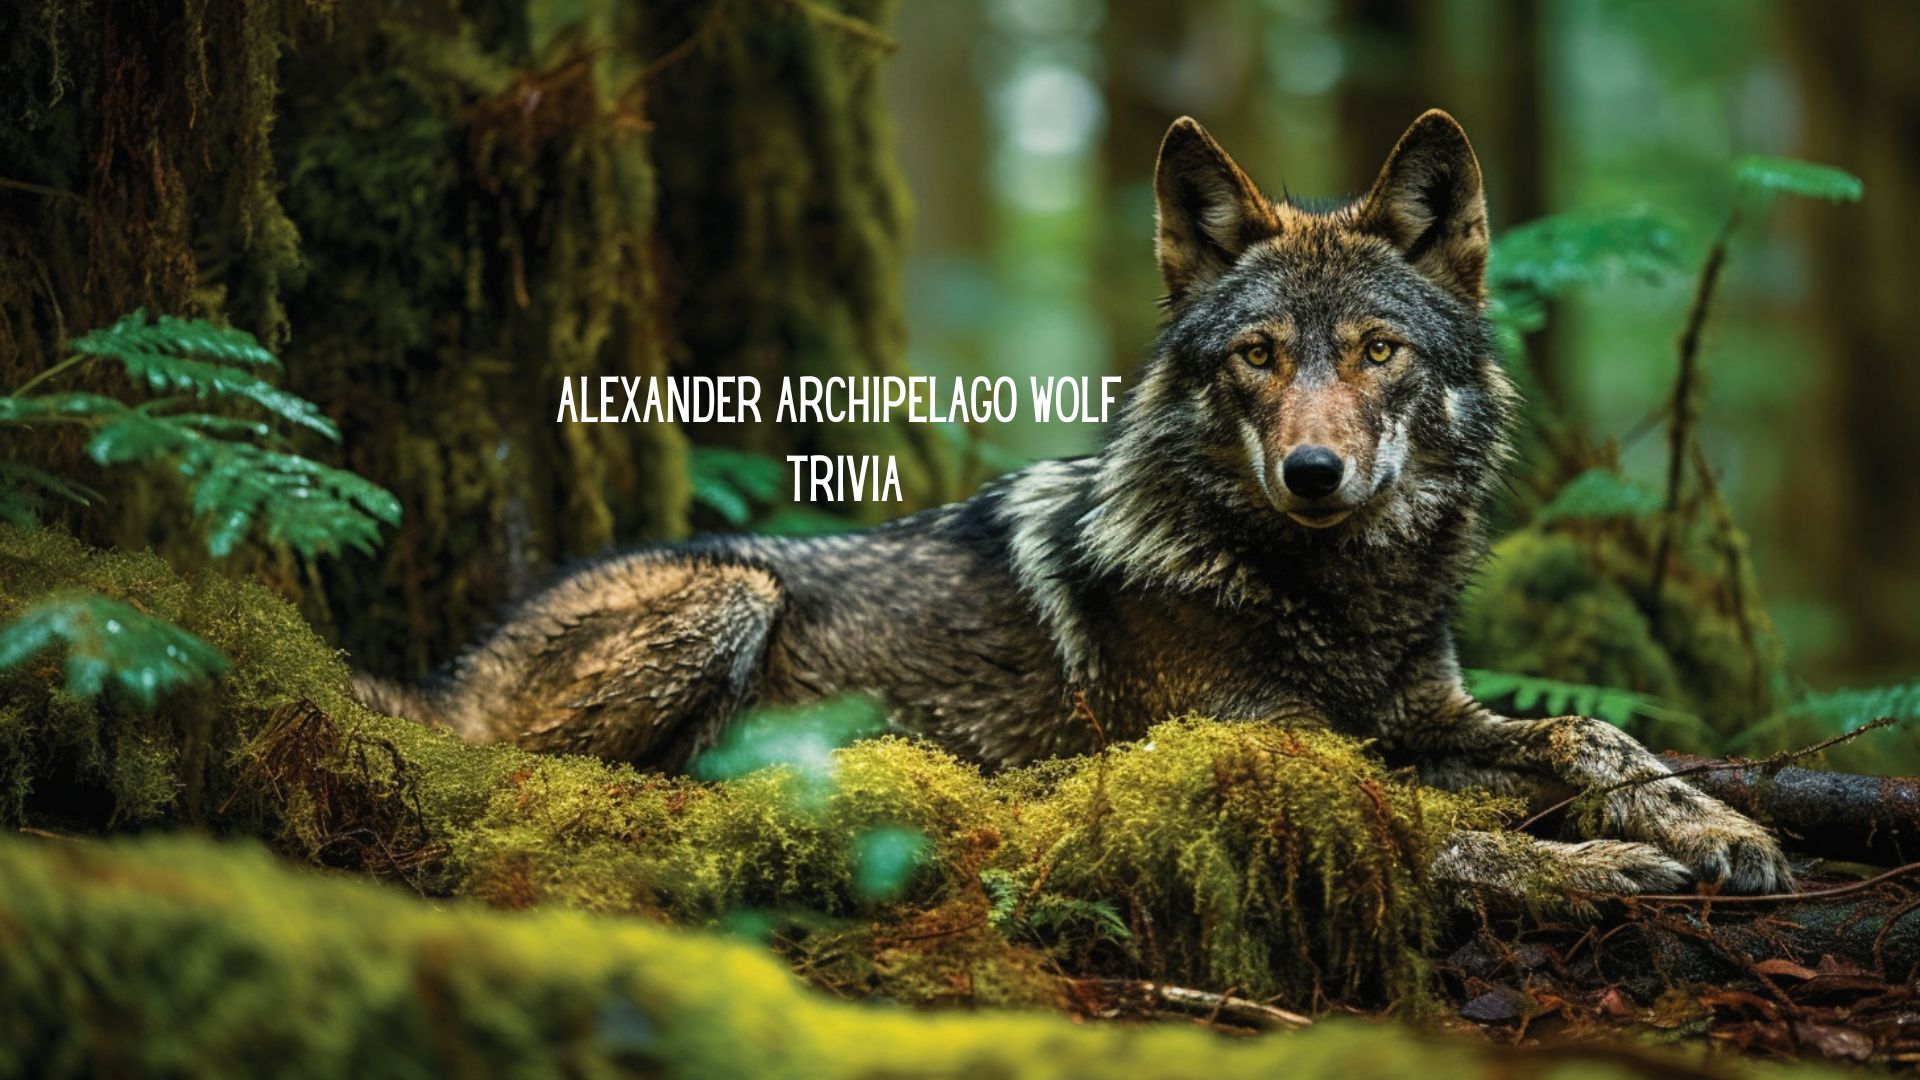 Alexander Archipelago Wolf Trivia